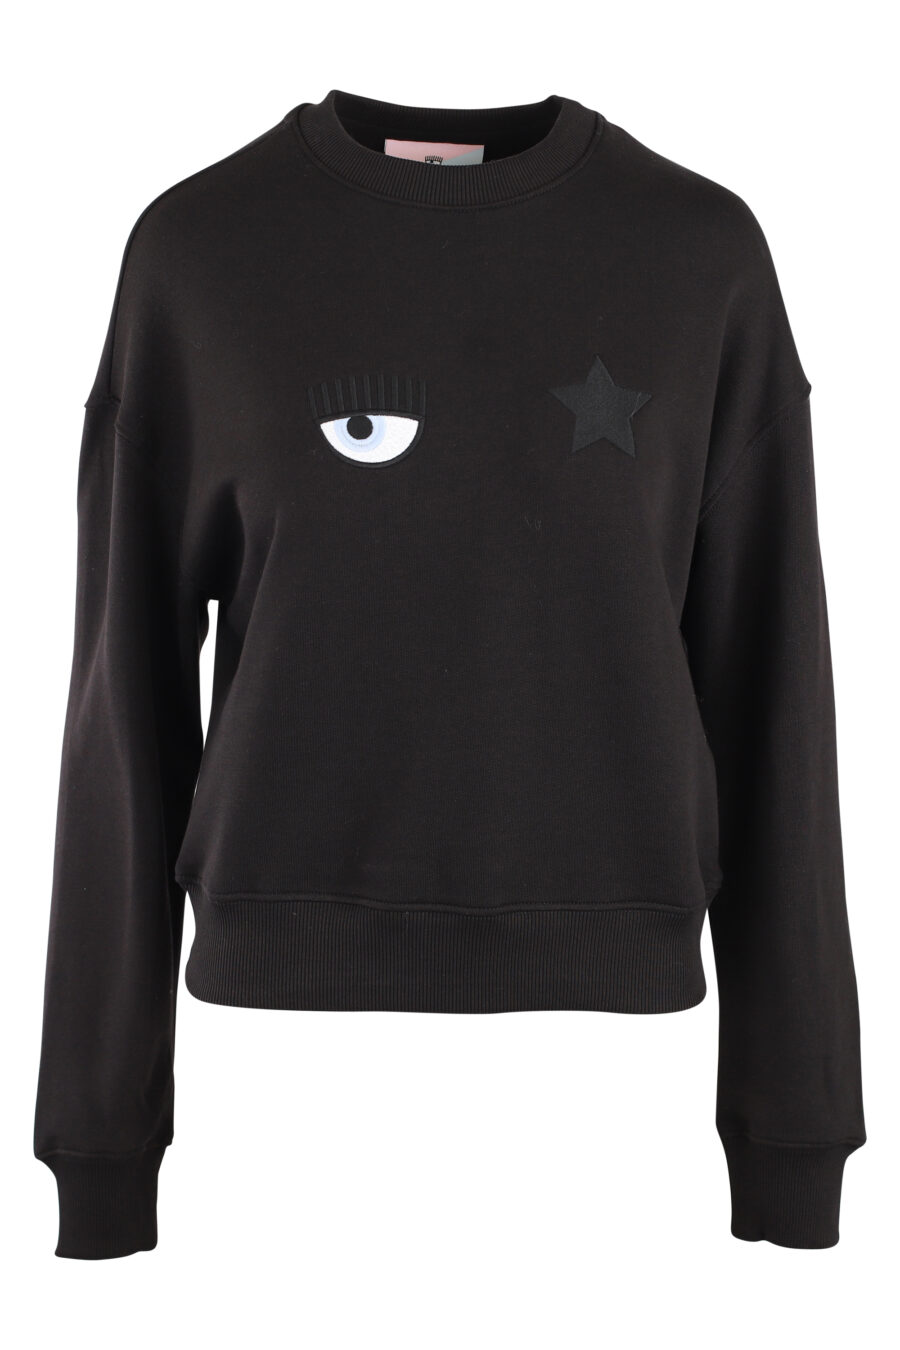 Black sweatshirt with eye and star logo - IMG 5501